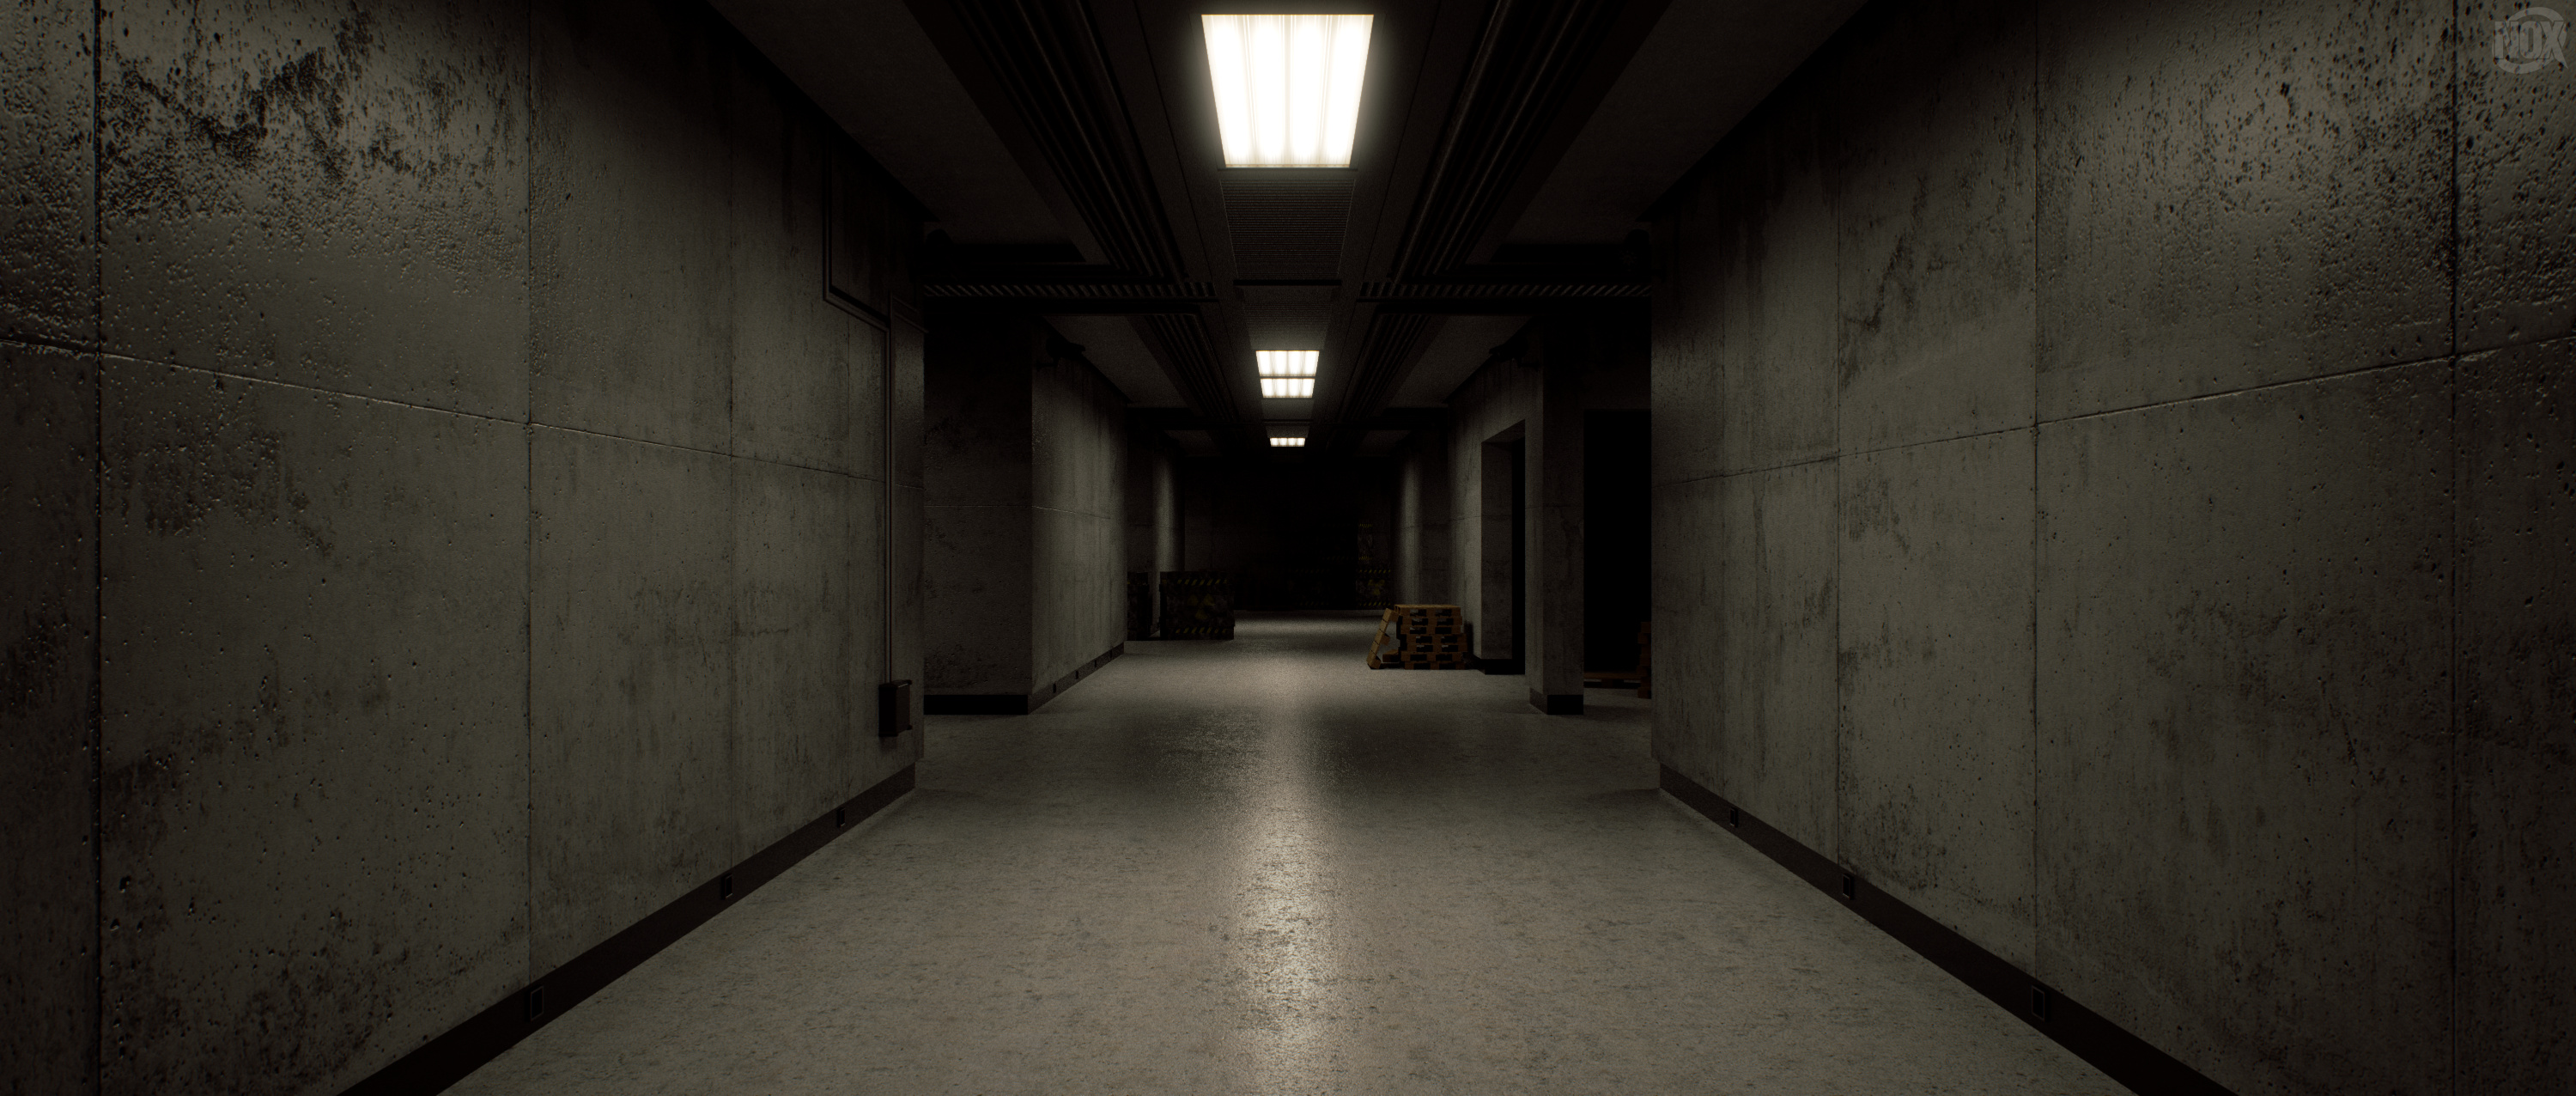 Corridor Pics, Dark Collection